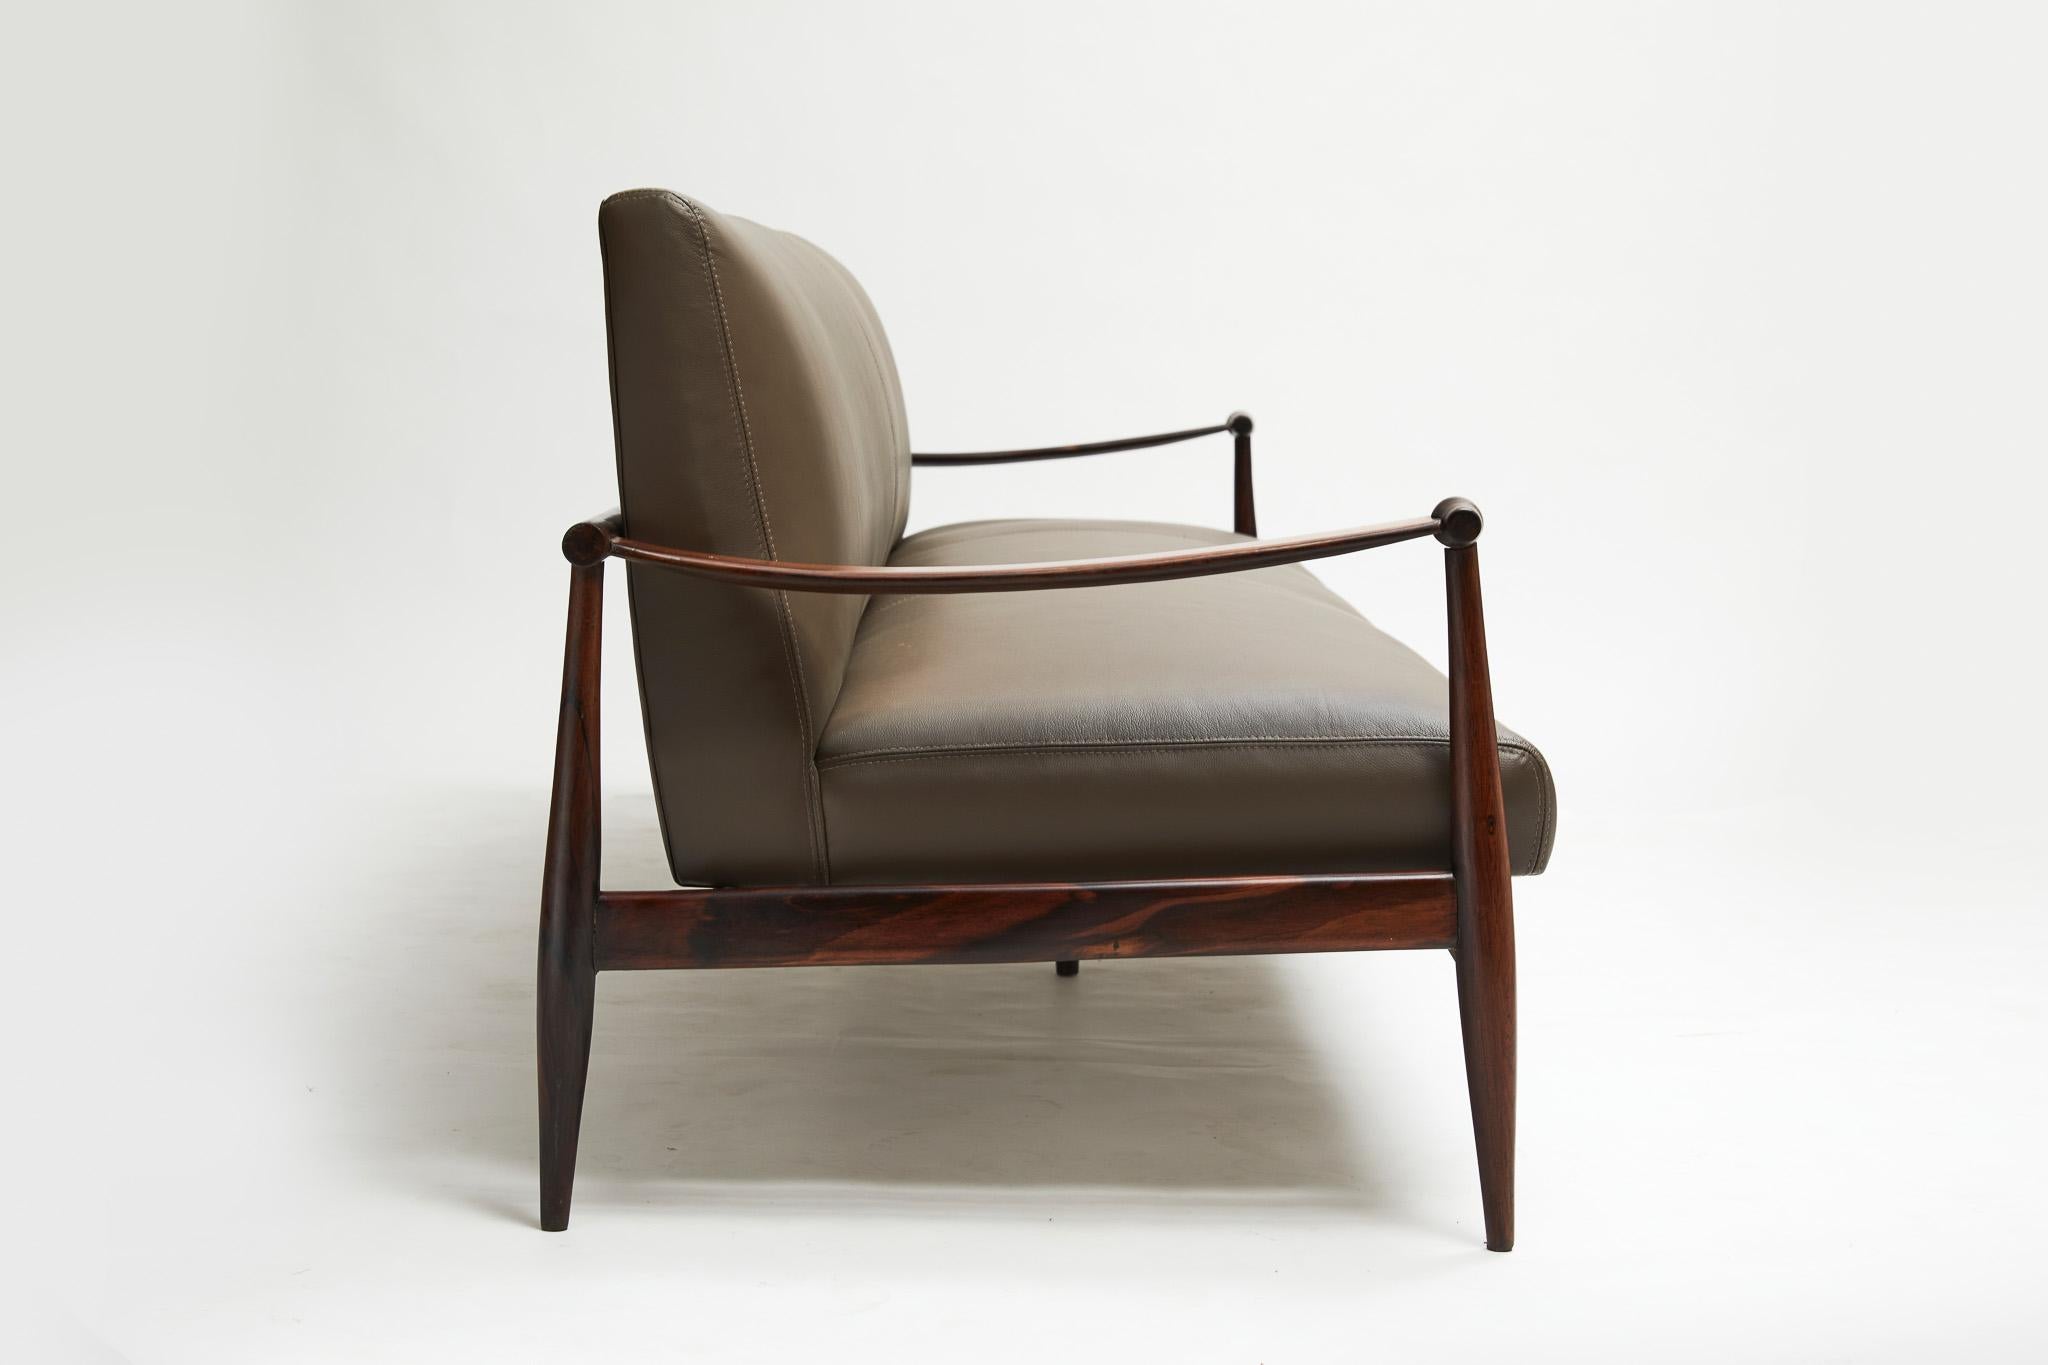 Brazilian Modern Sofa in Hardwood & Brown Leather by Liceu De Artes 1960 For Sale 2